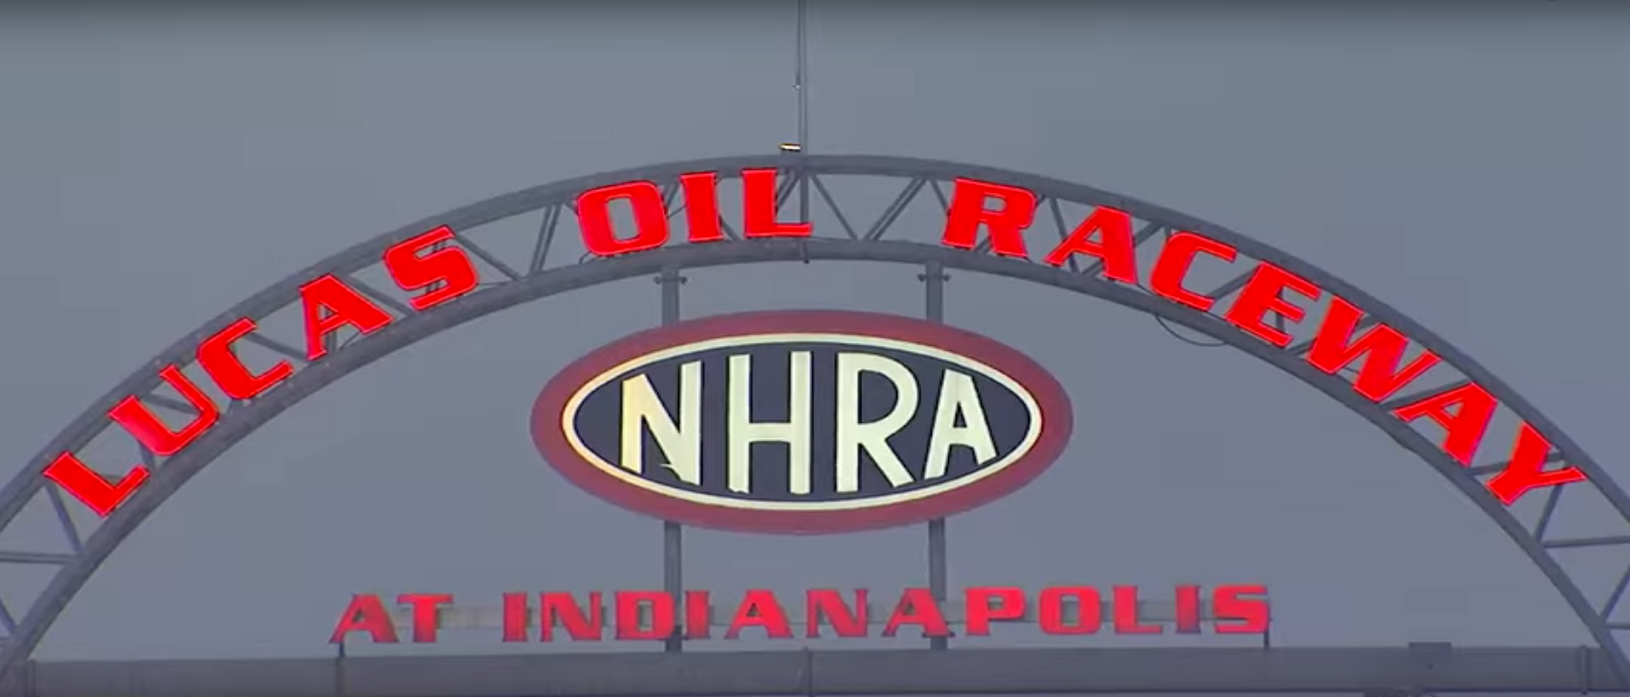 Legendary Lucas Oil Raceway at Indianapolis